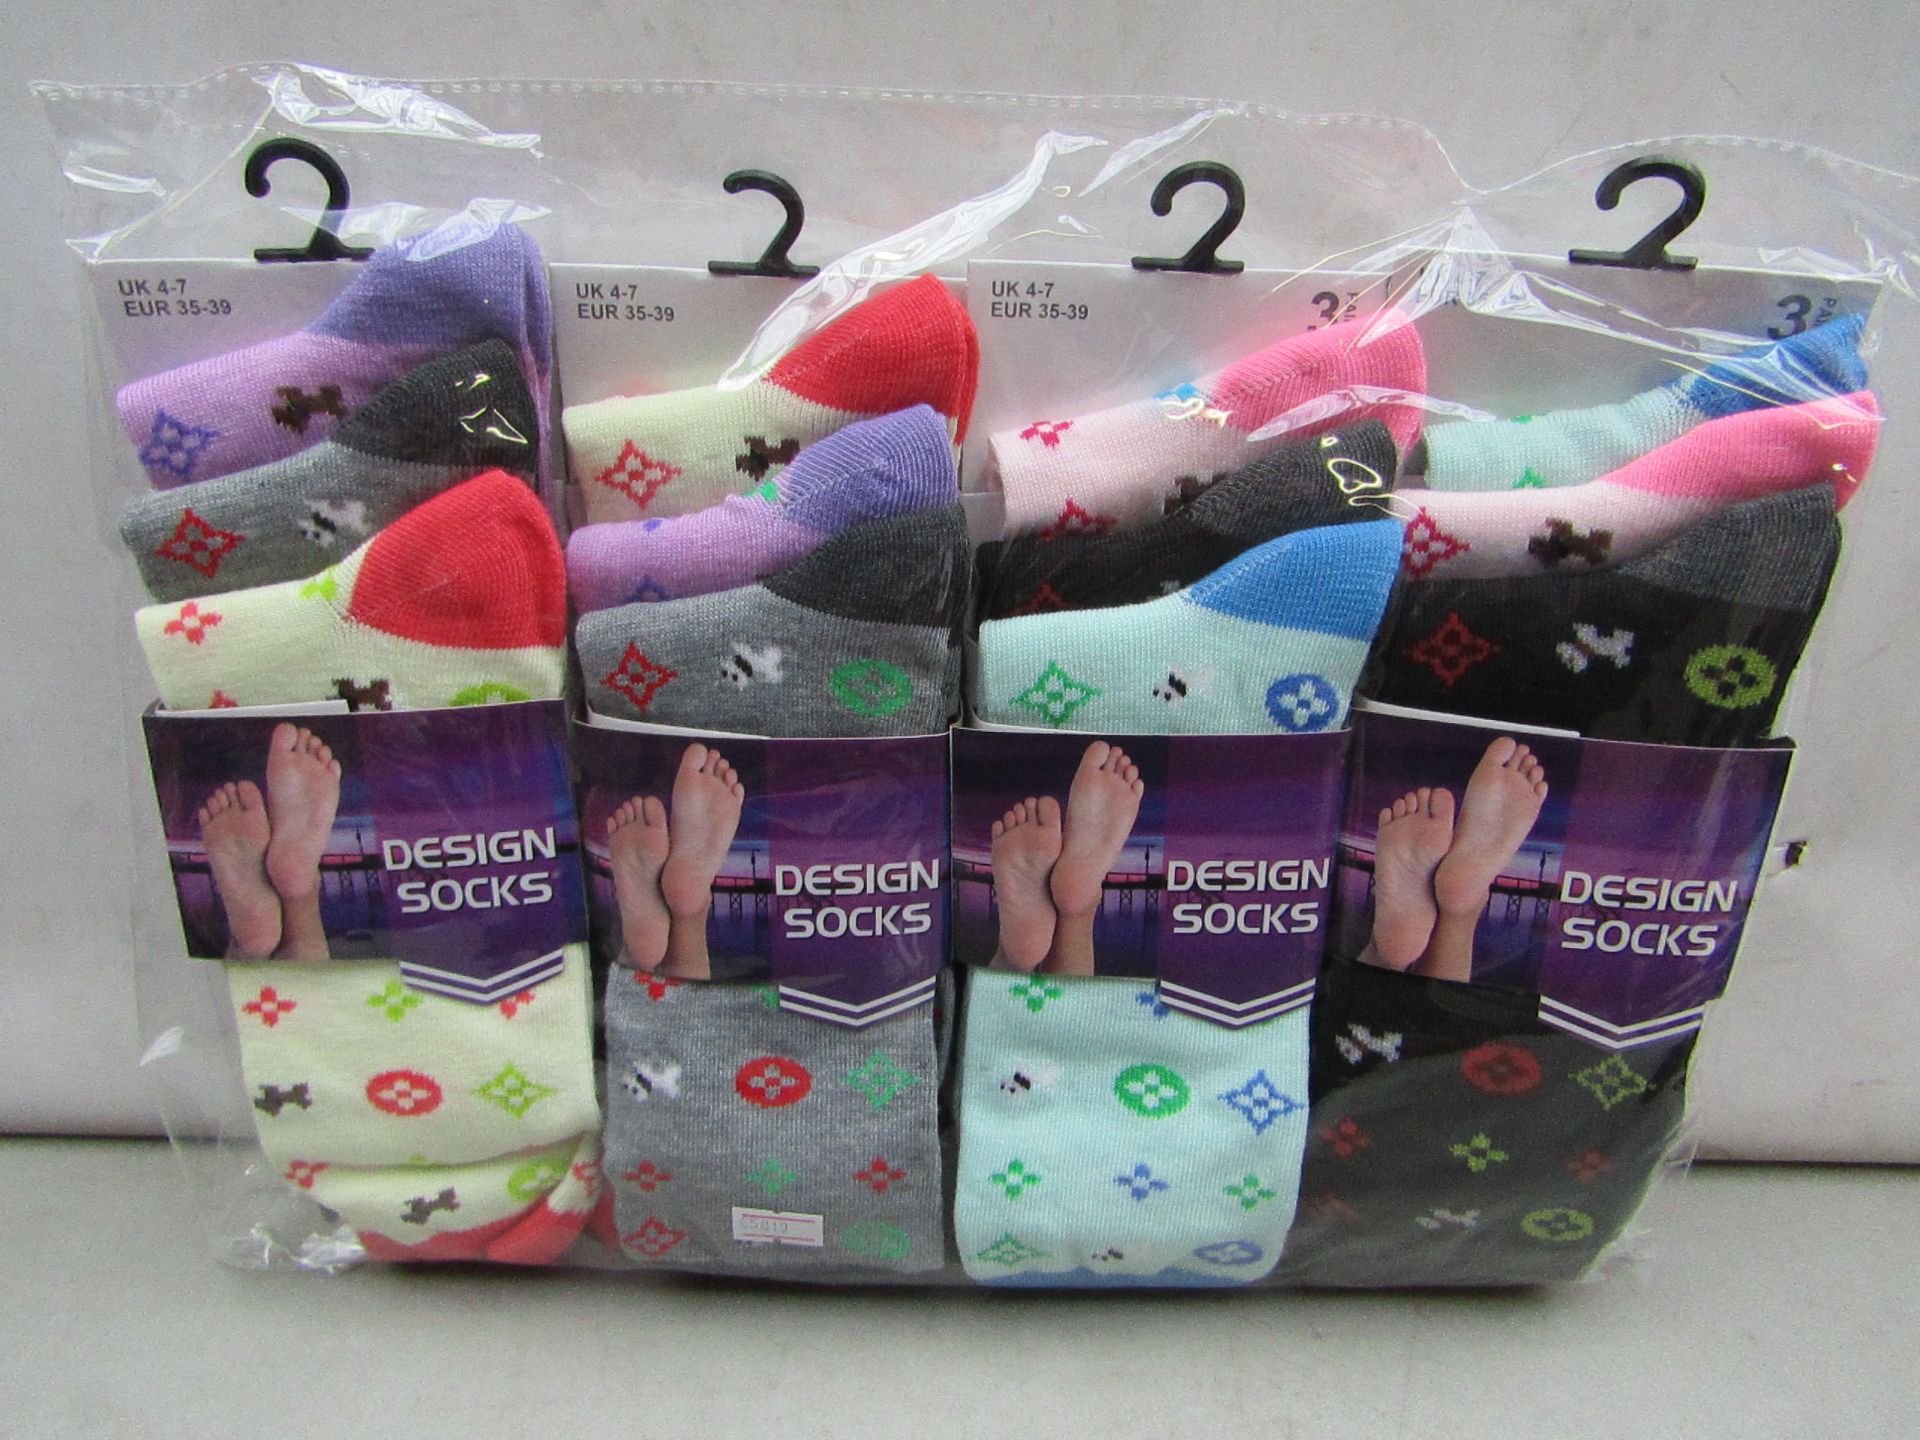 Pack of 12 pairs Ladies Design Socks  Size 4-7 new in packaging